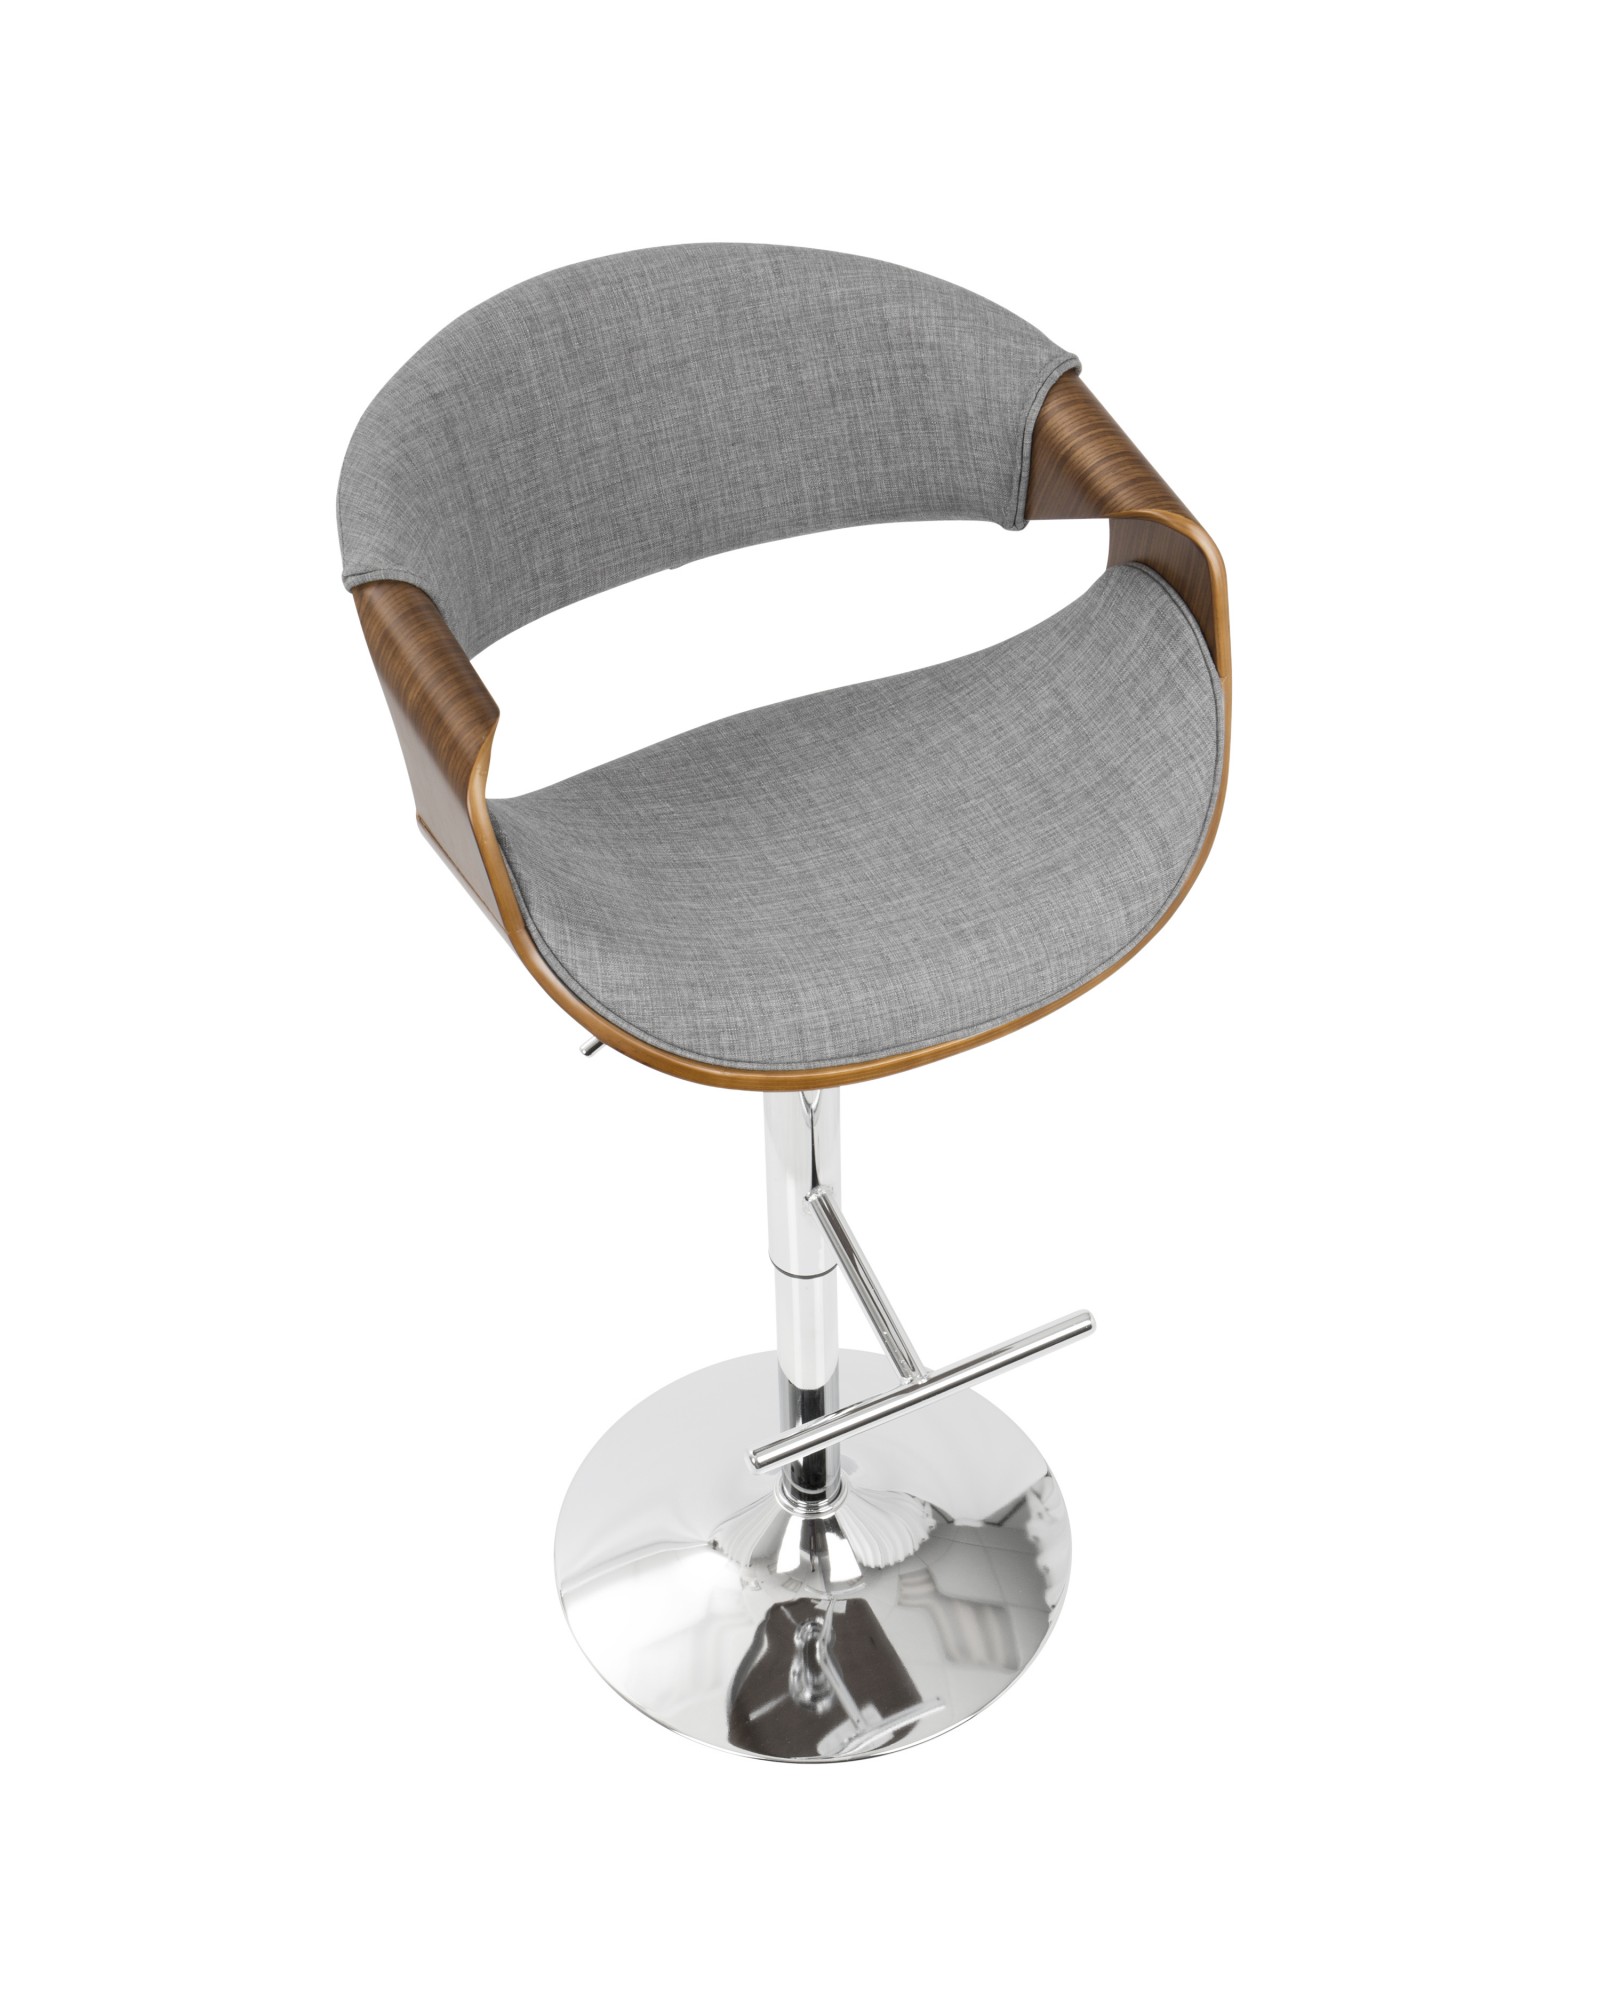 Curvo Mid-Century Modern Adjustable Barstool with Swivel in Walnut and Light Grey